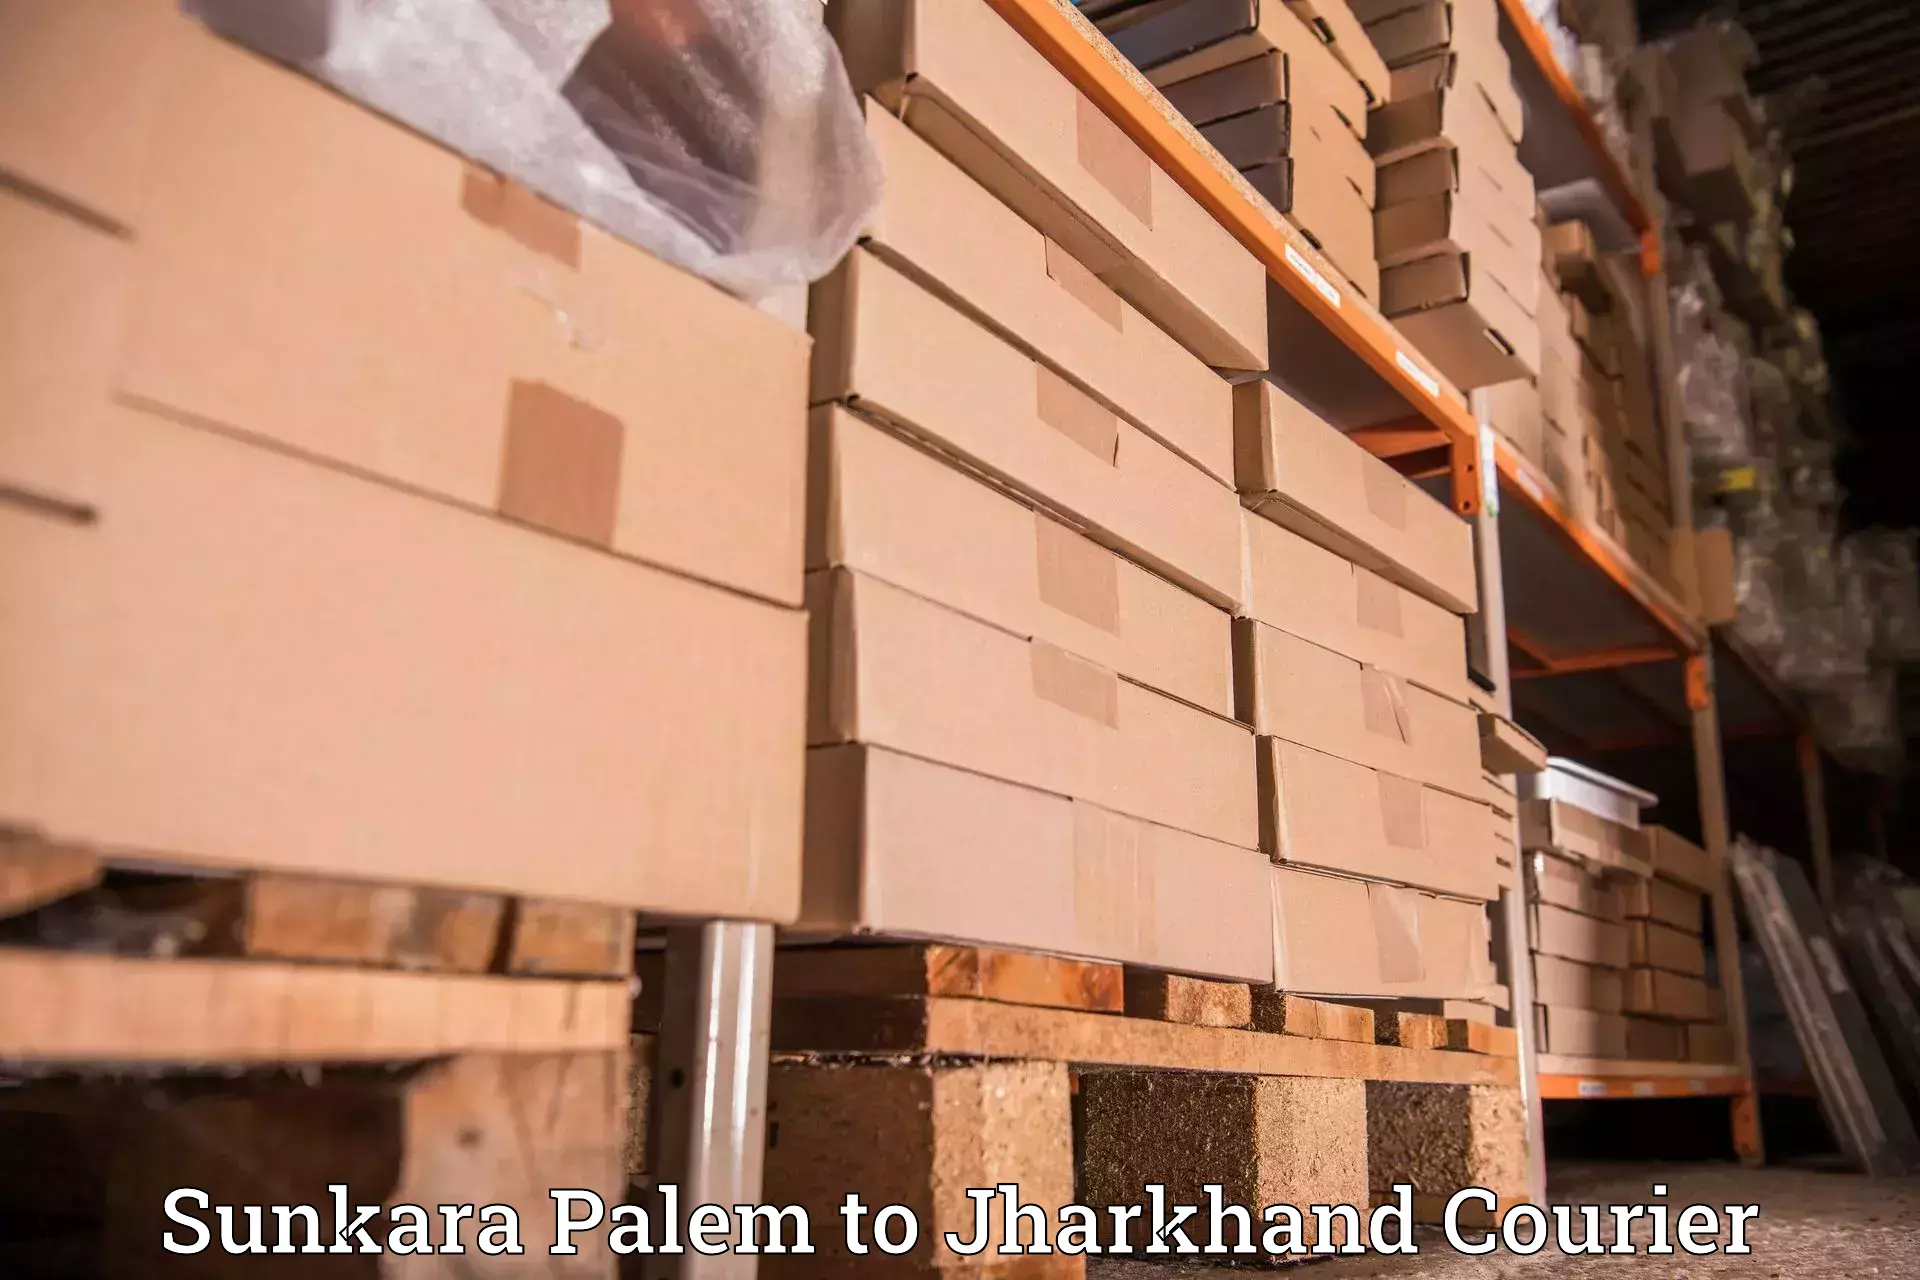 Next-day delivery options Sunkara Palem to Ormanjhi